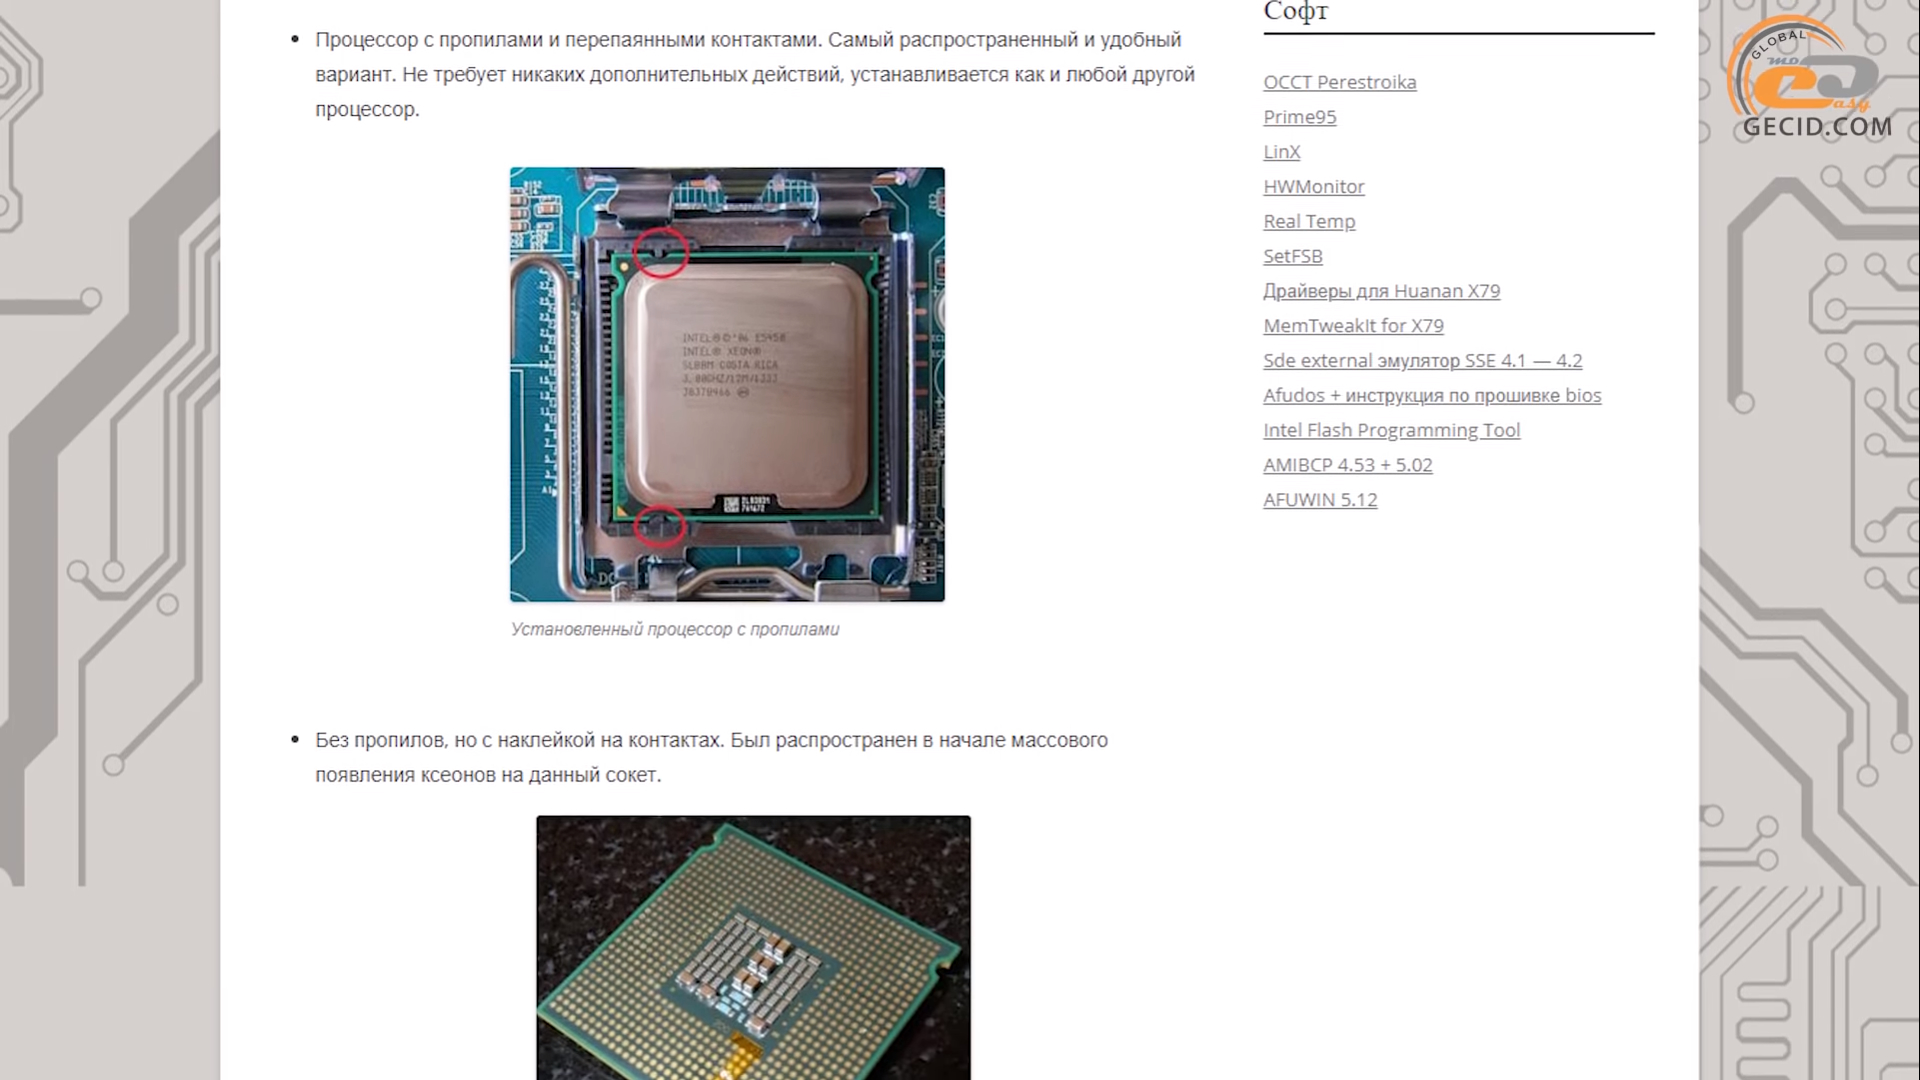 Intel Xeon x5460. X5460. Xeon x5460 характеристики. Сервер на базе процессора Xeon x5460.